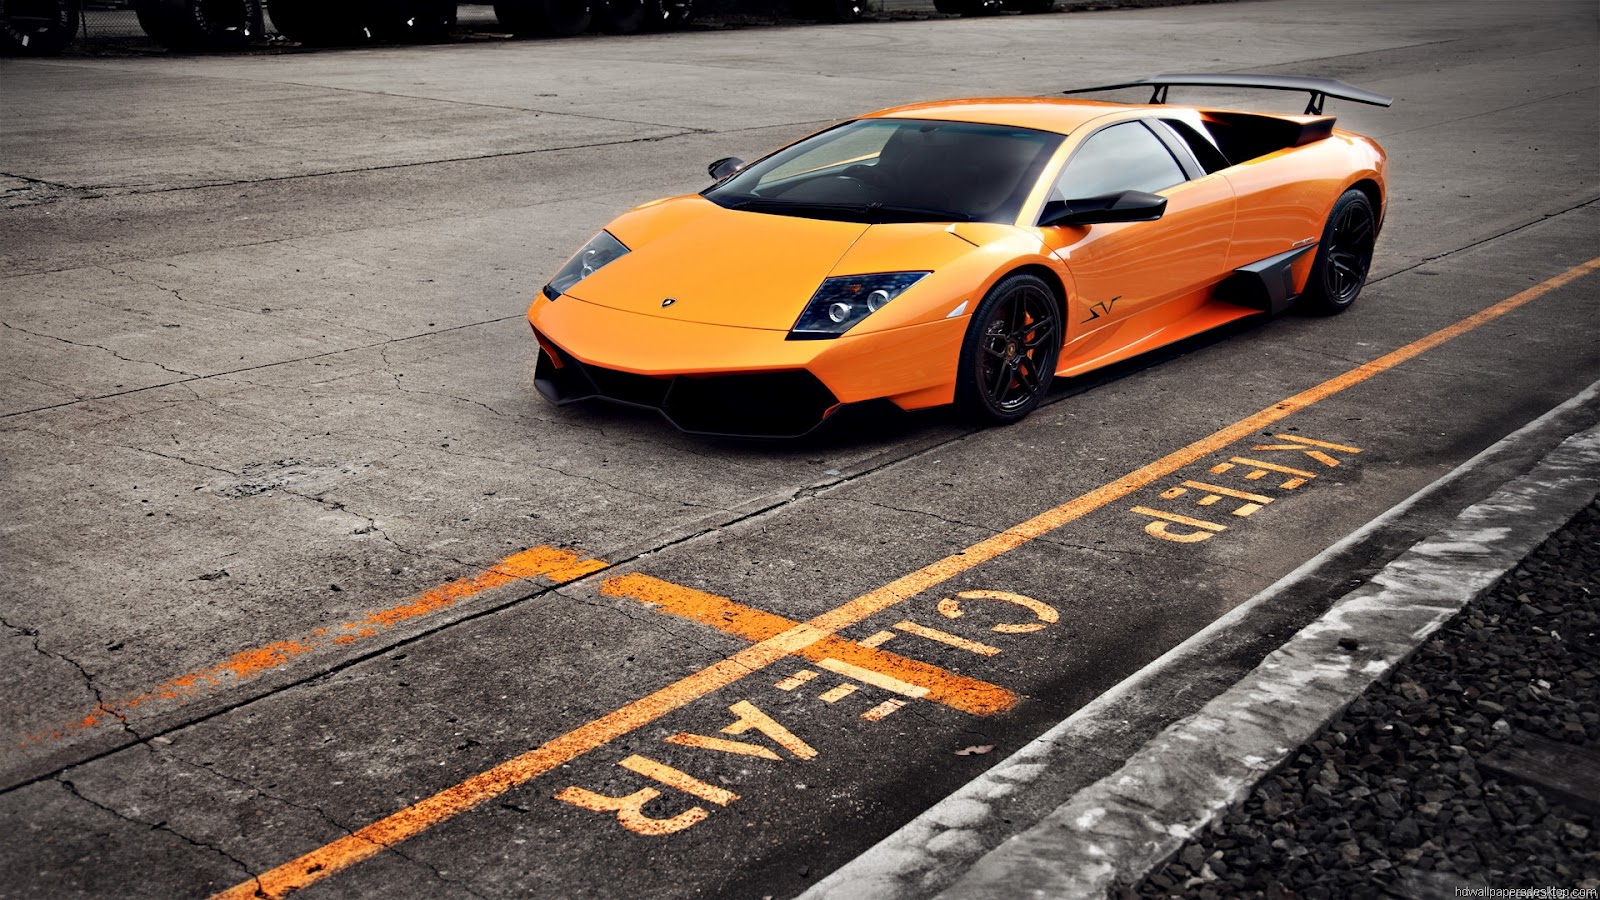 HIGH DEFINITION 1080p wallpapers of Lamborghini